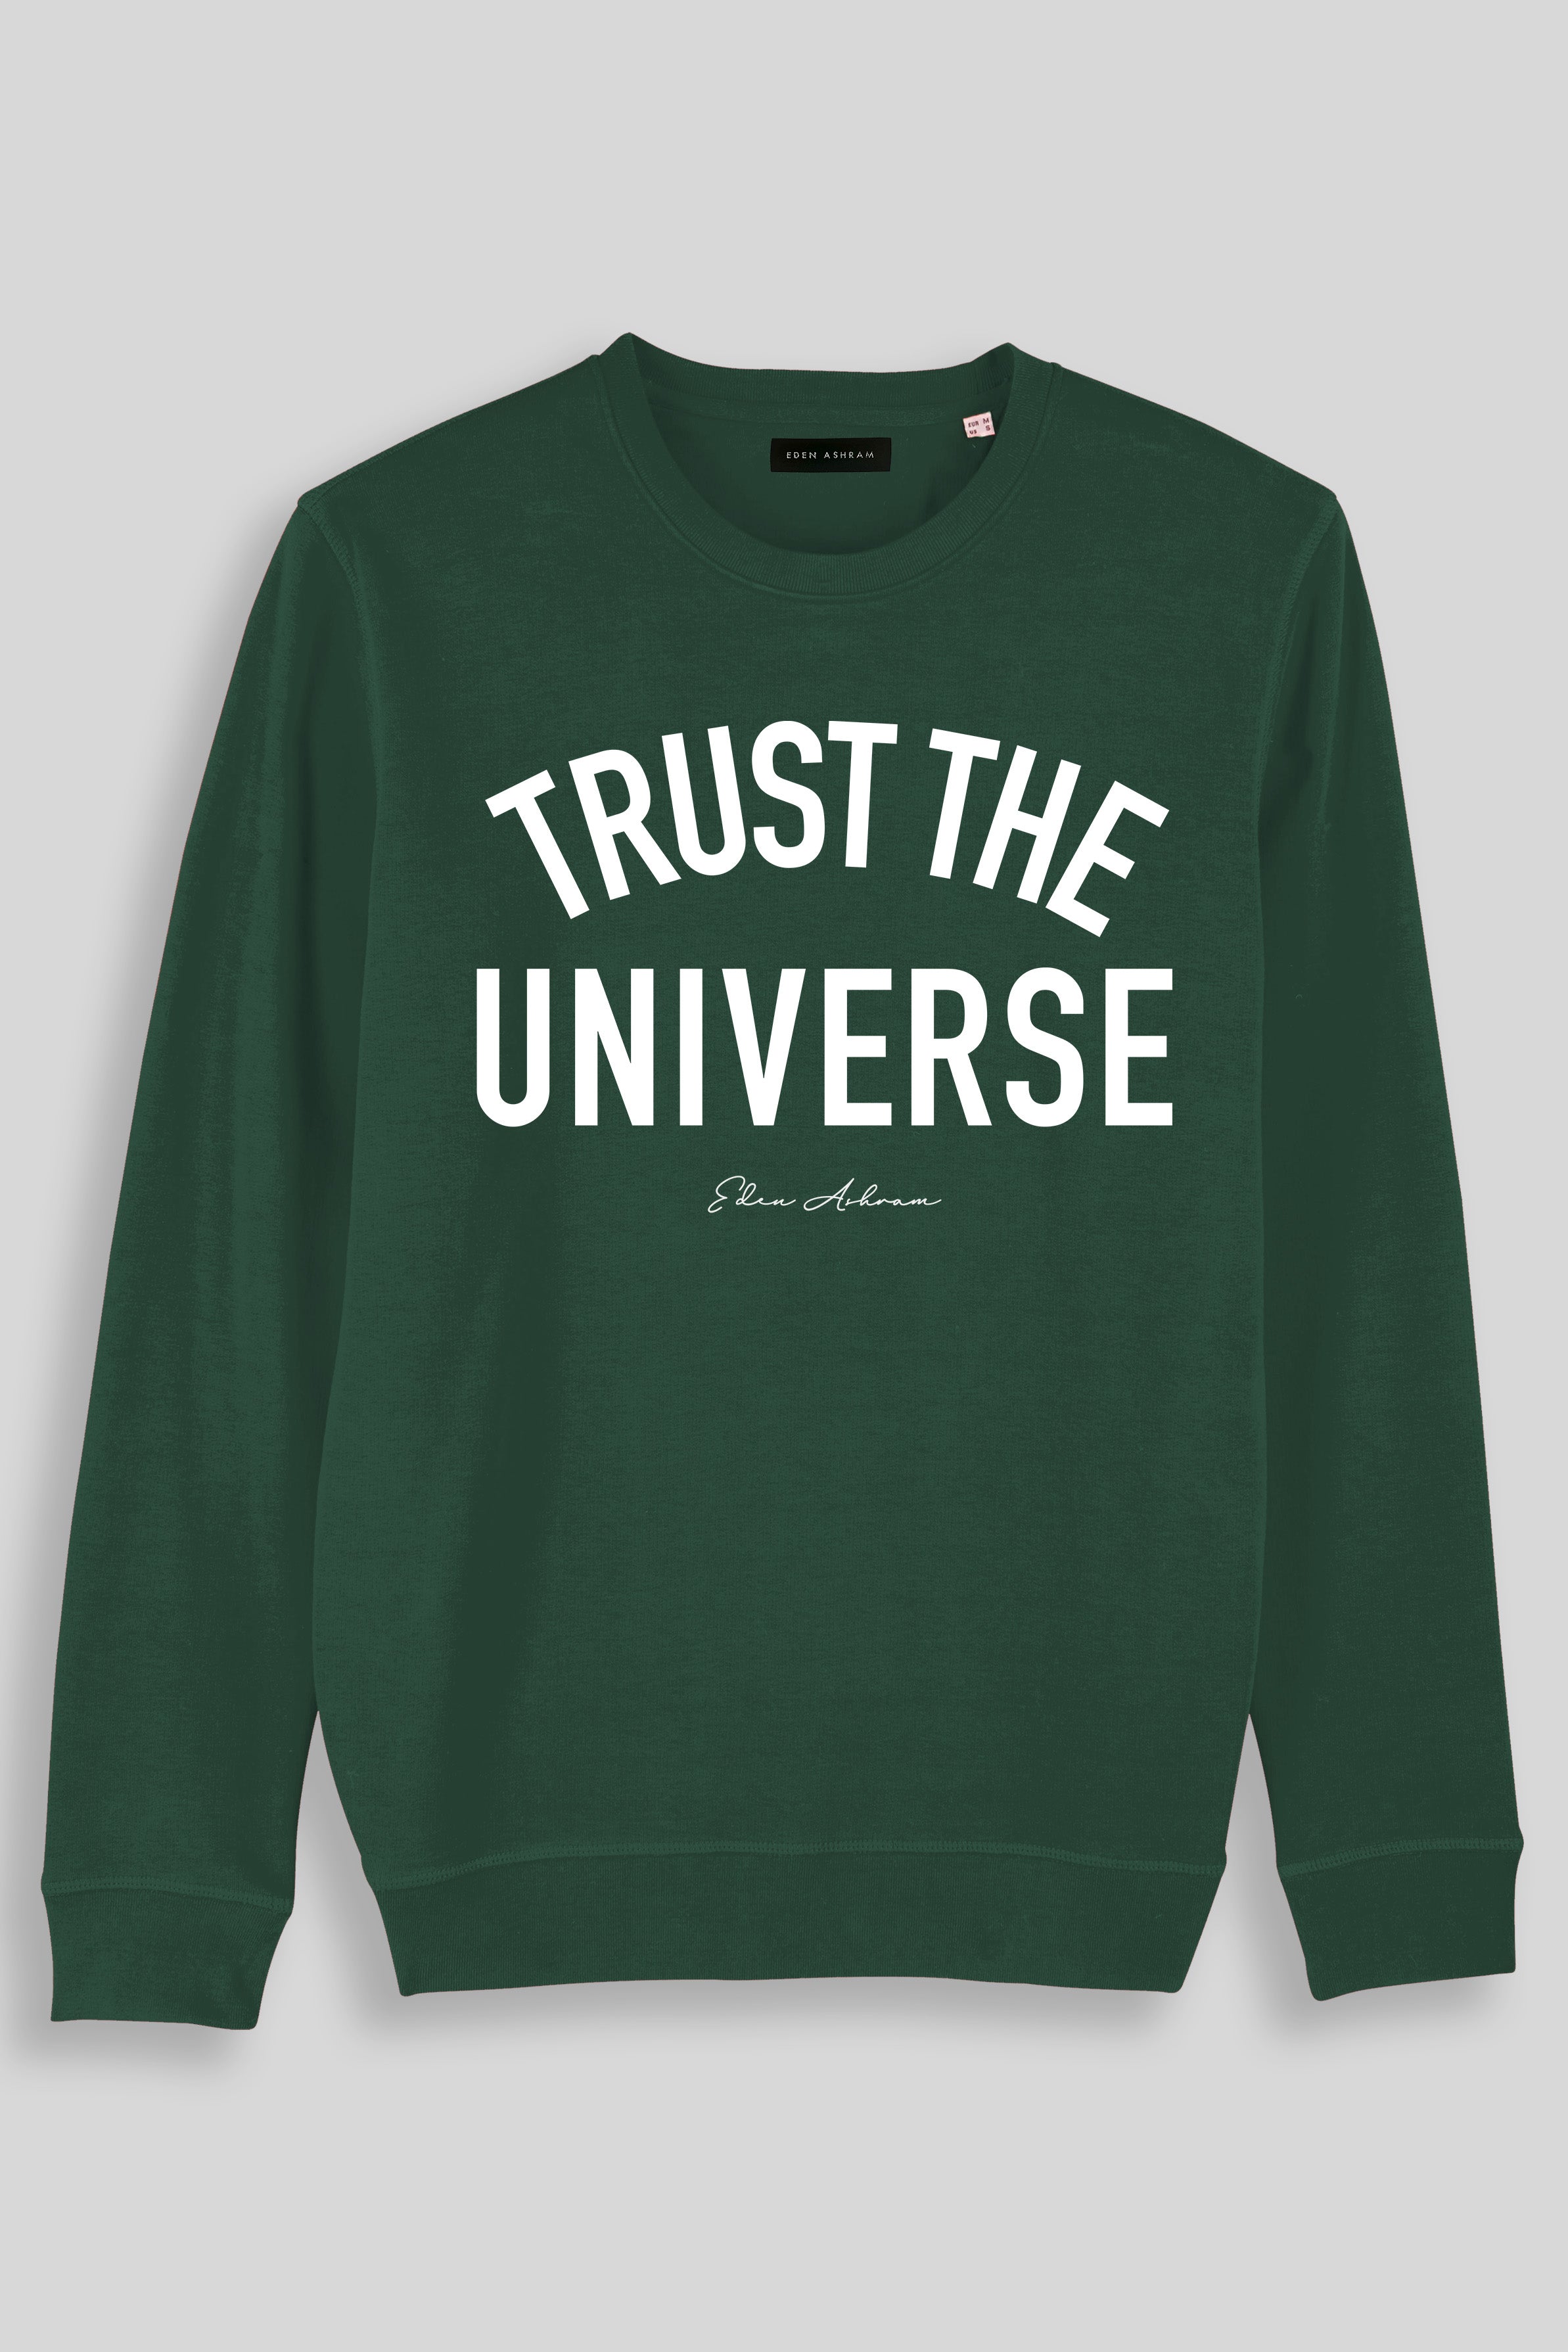 EDEN ASHRAM Trust The Universe Premium Crew Neck Sweatshirt Bottle Green